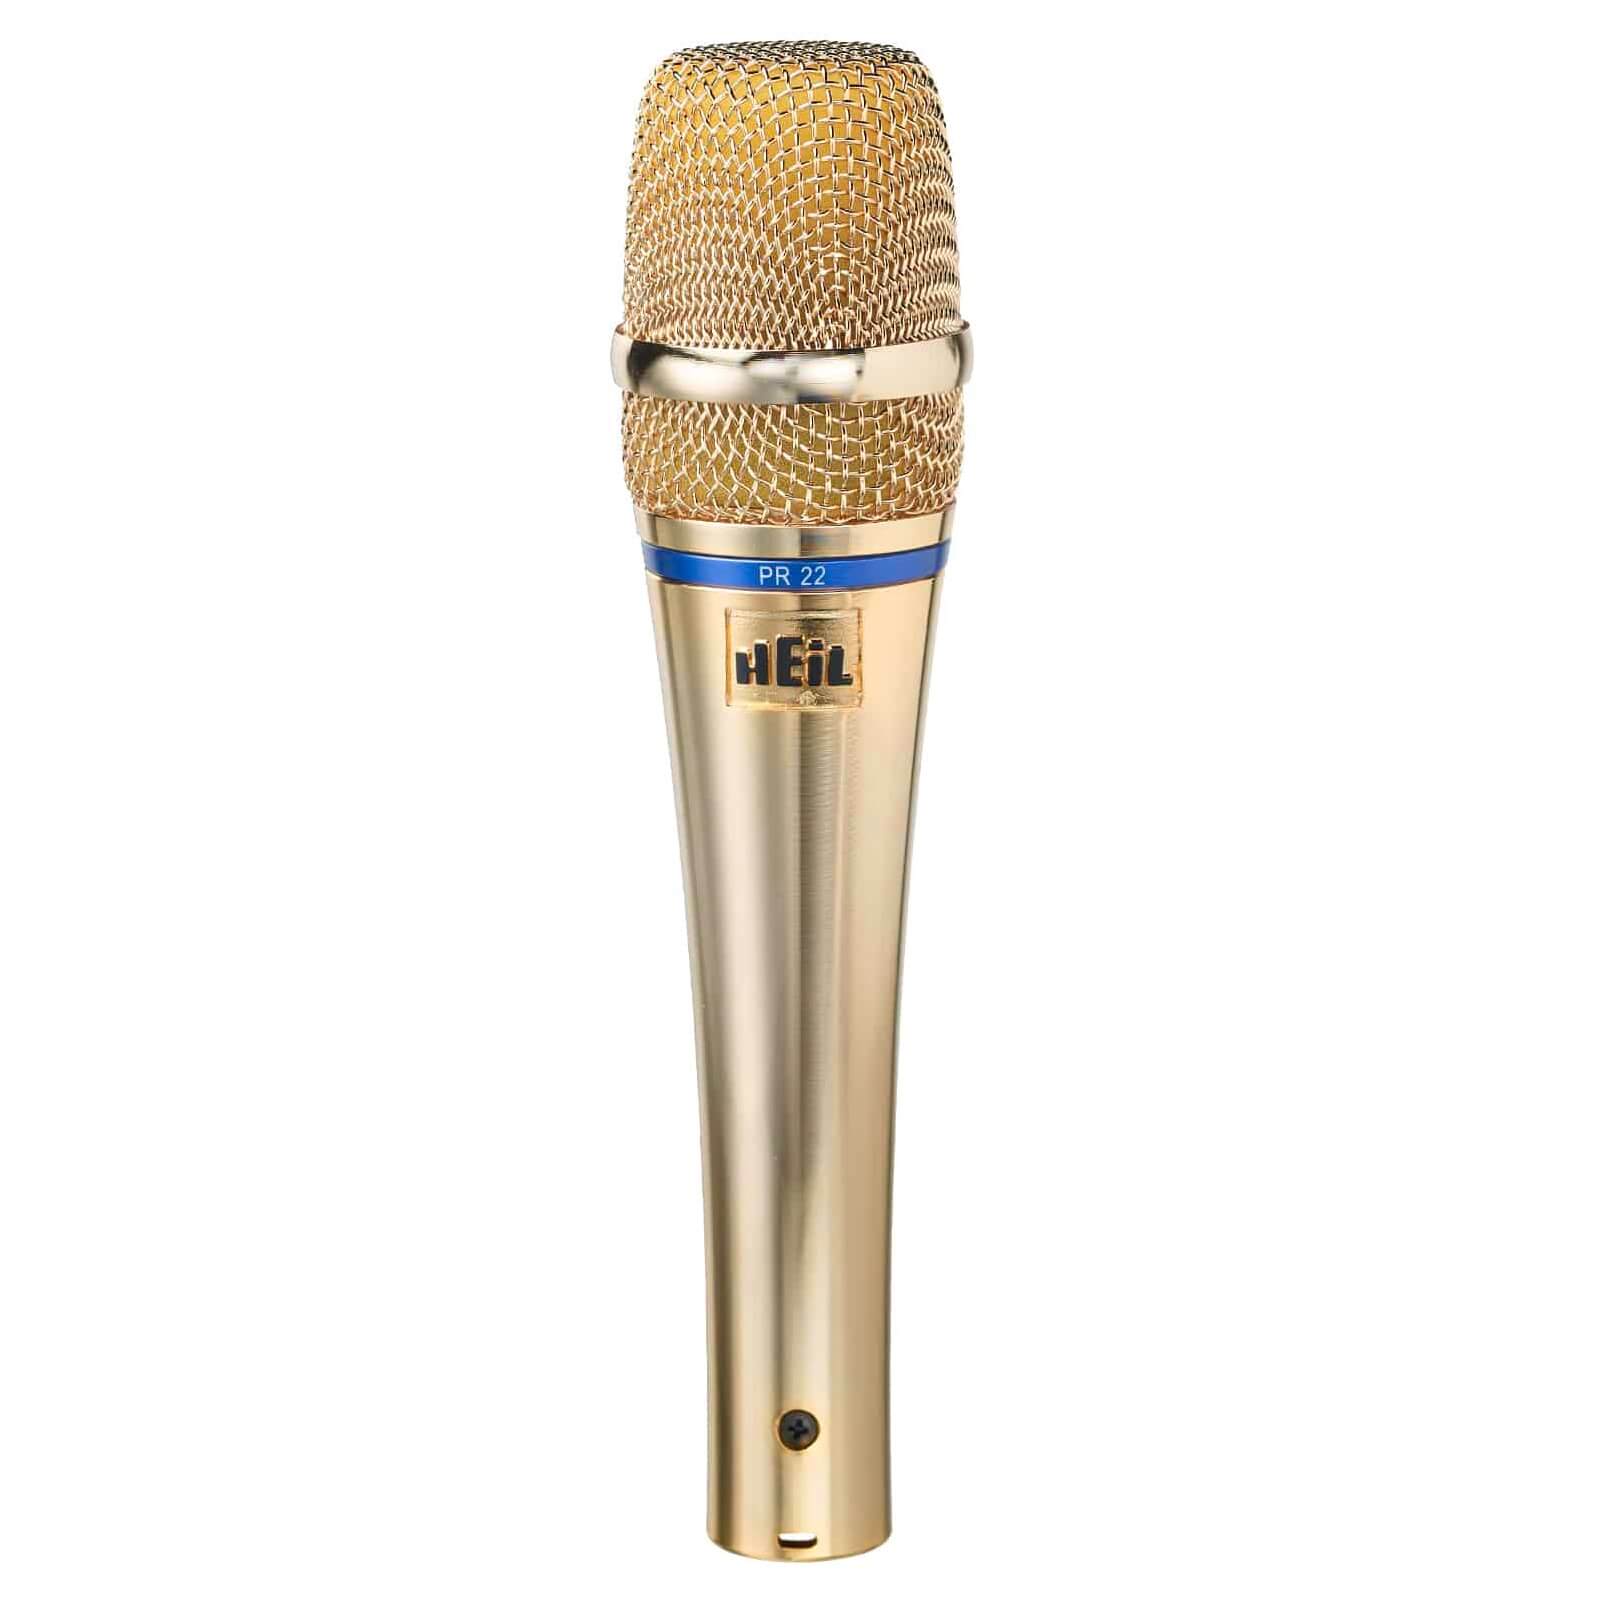 Heil PR 22 UT Handheld Dynamic Vocal Microphone, gold